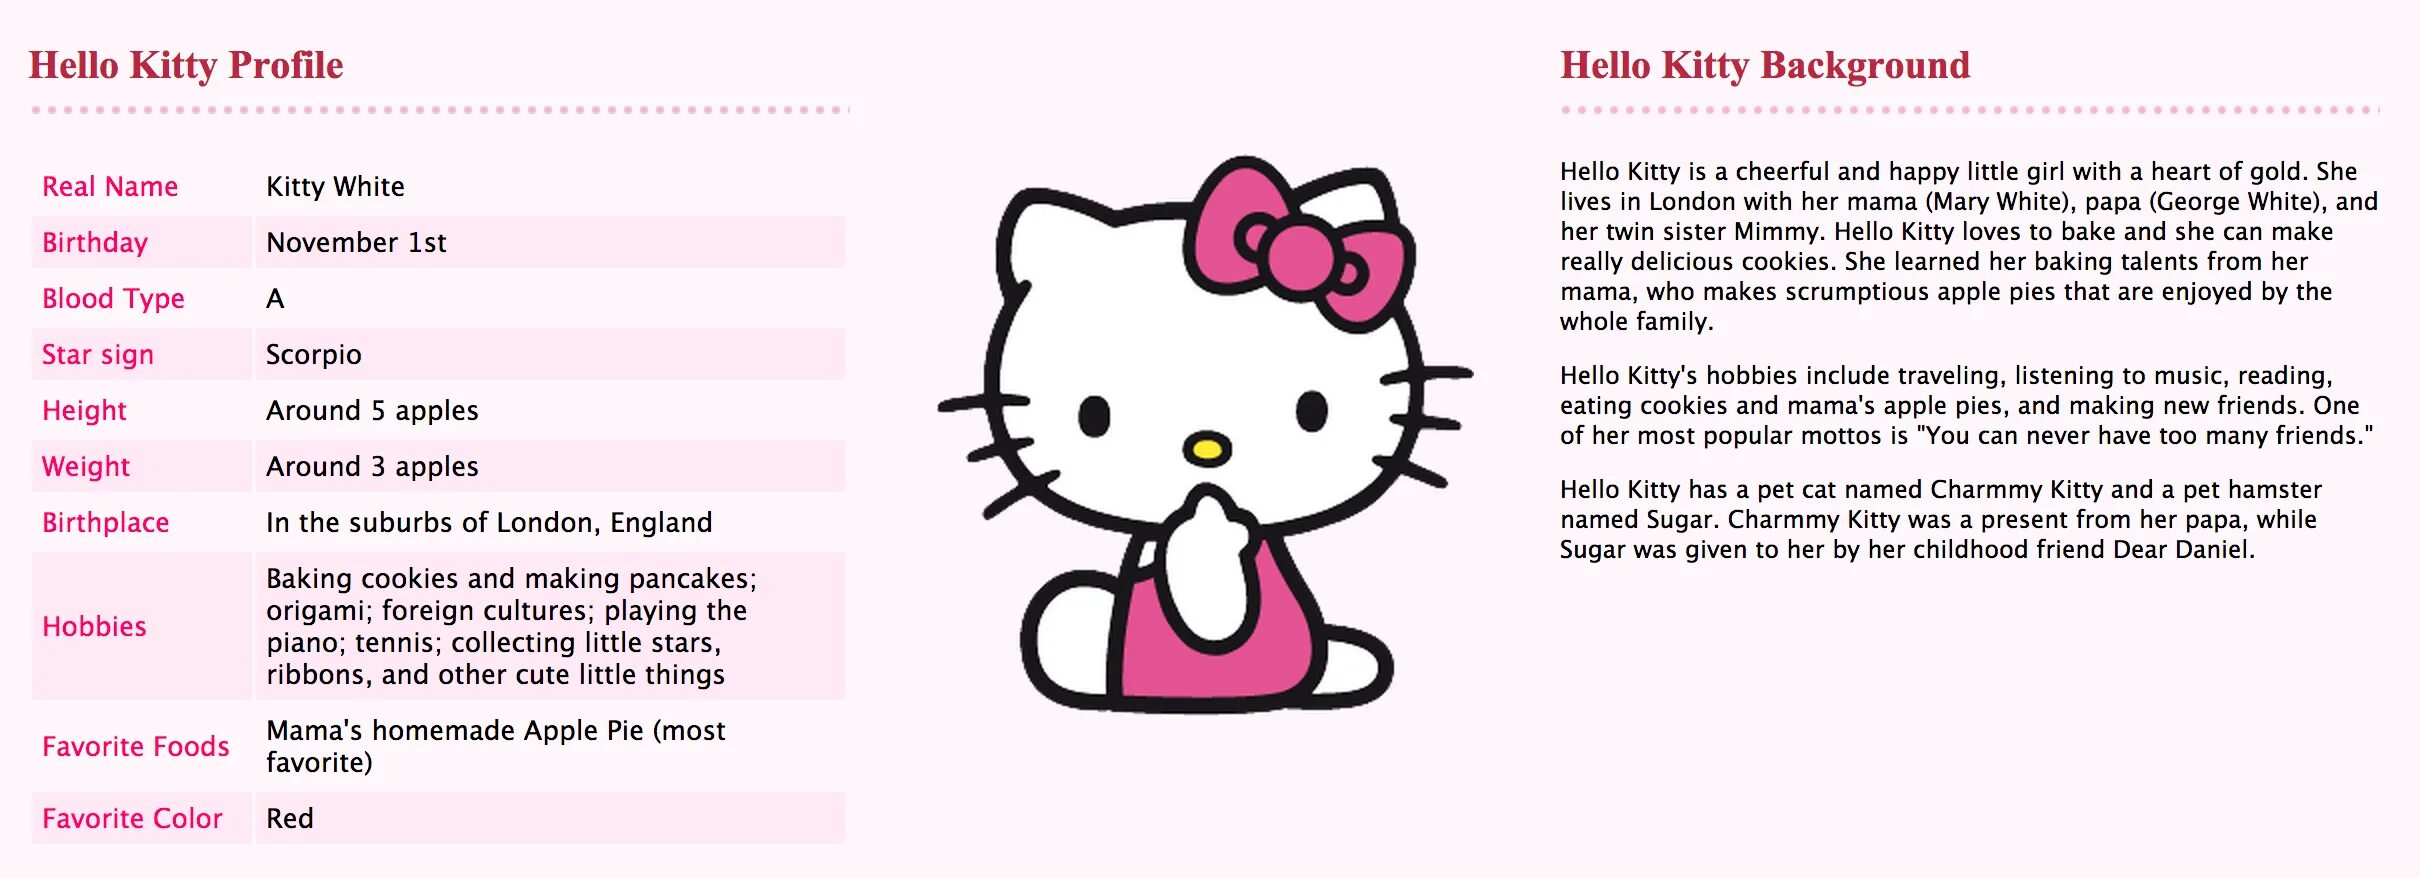 Хеллоу Китти имена. Hello Kitty персонажи с именами. Hello Kitty с описанием. Хеллоу Китти и друзья имена. Хеллоу история